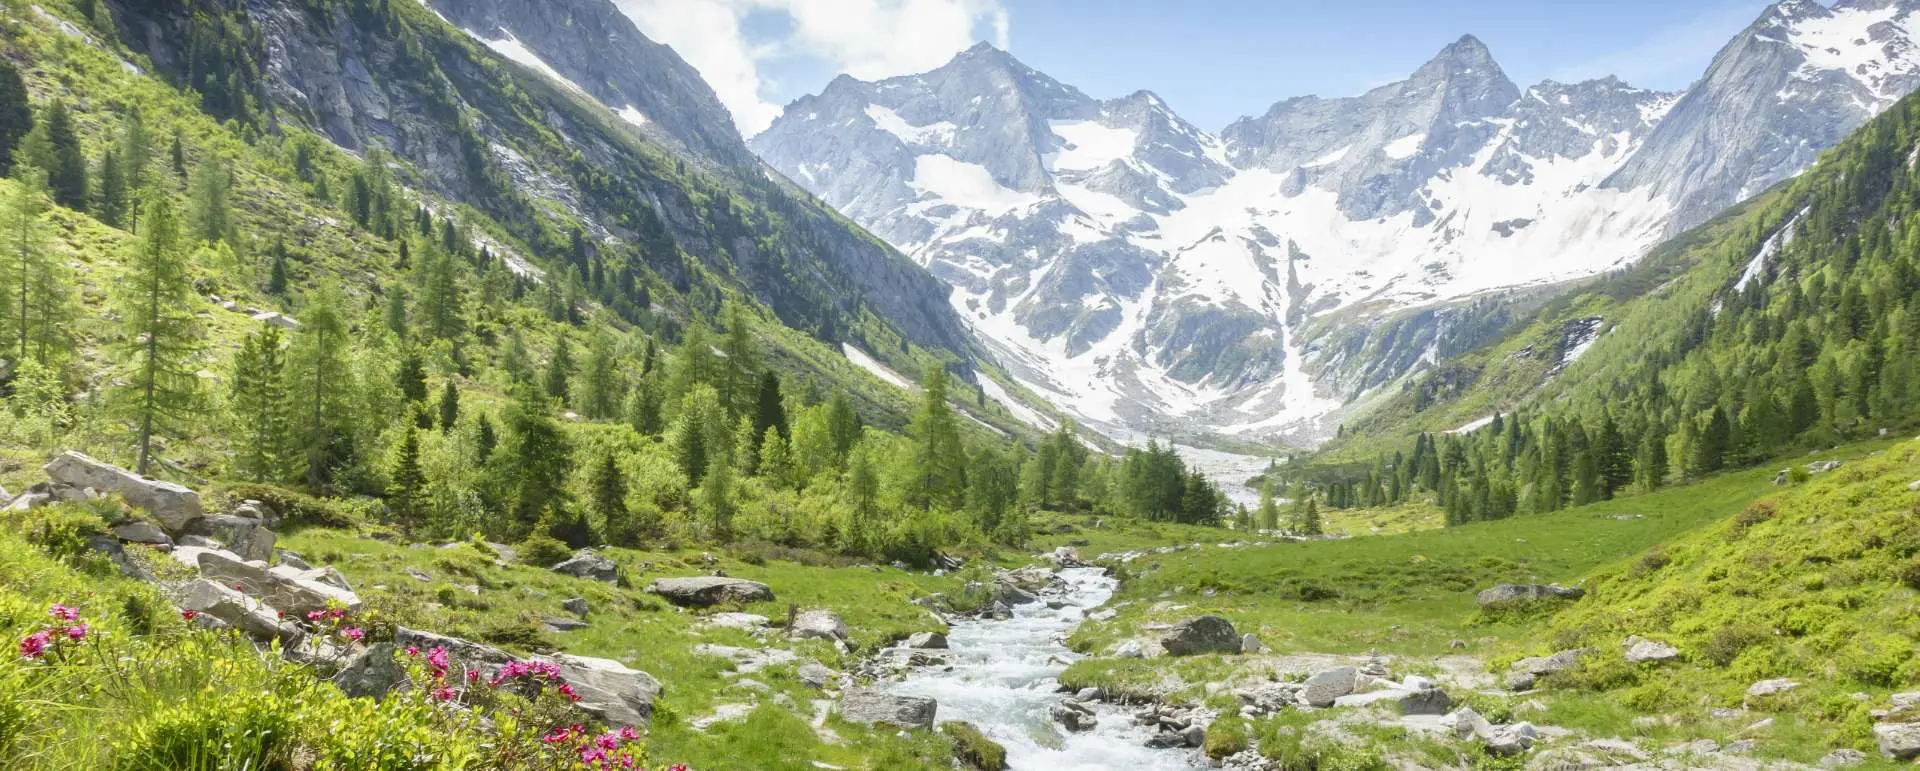 Alpbachtal - the destination for hikers